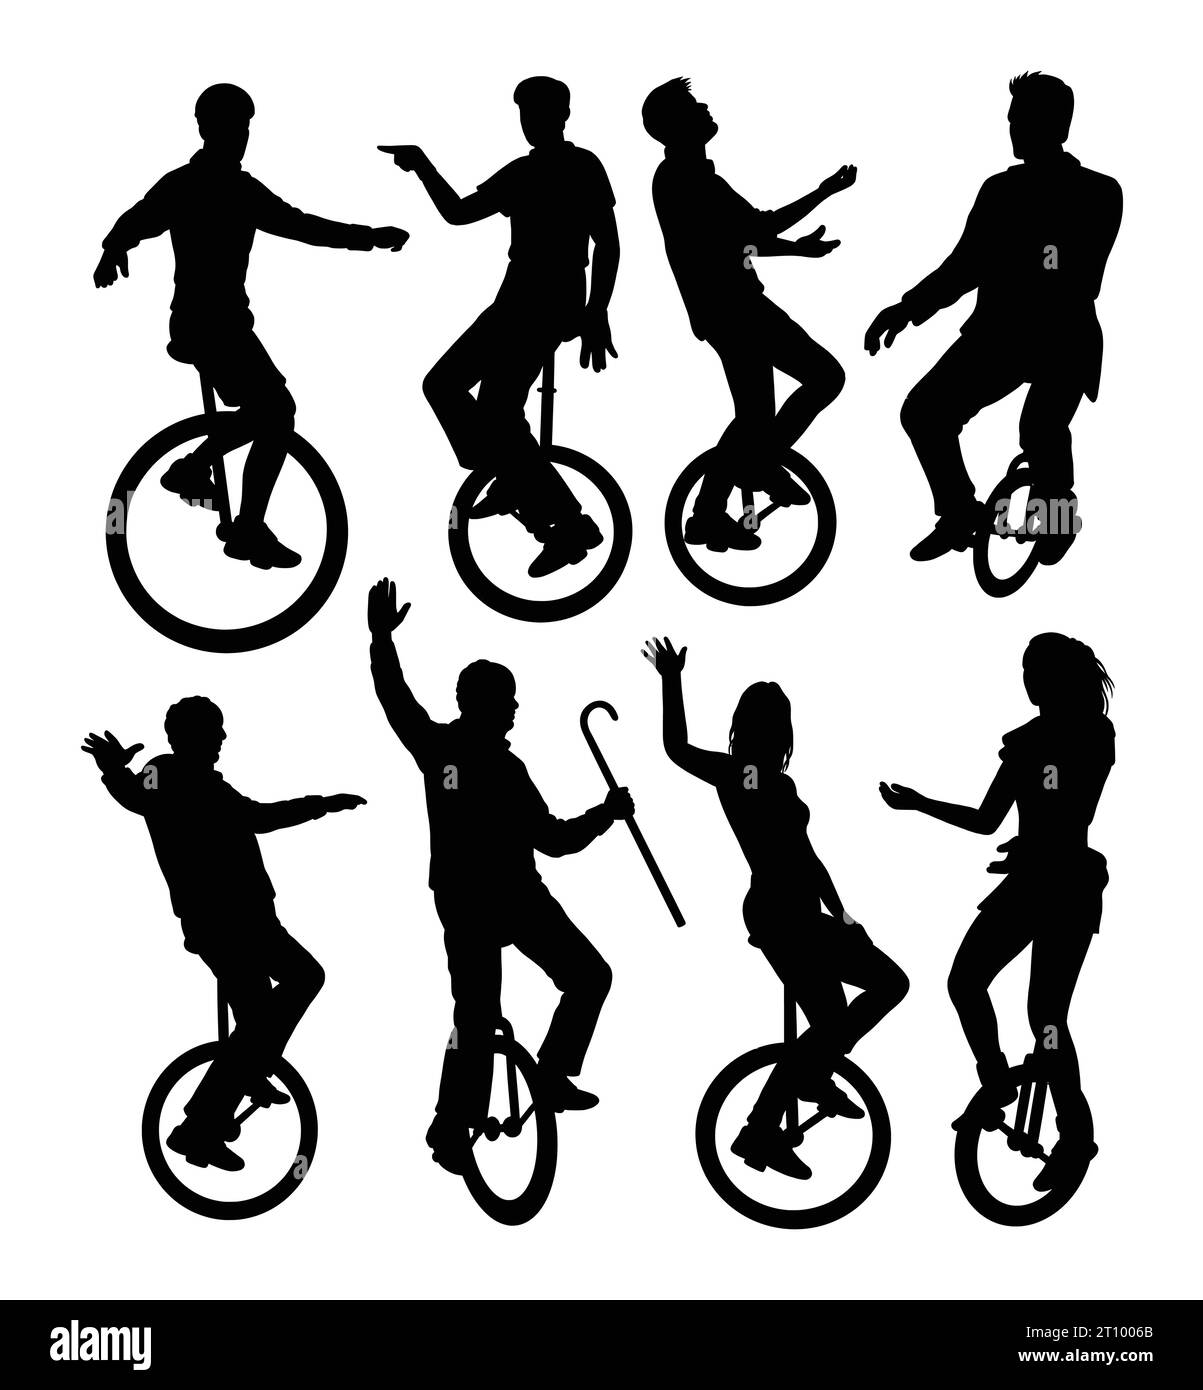 people riding monowheel bicycle silhouette Stock Vector